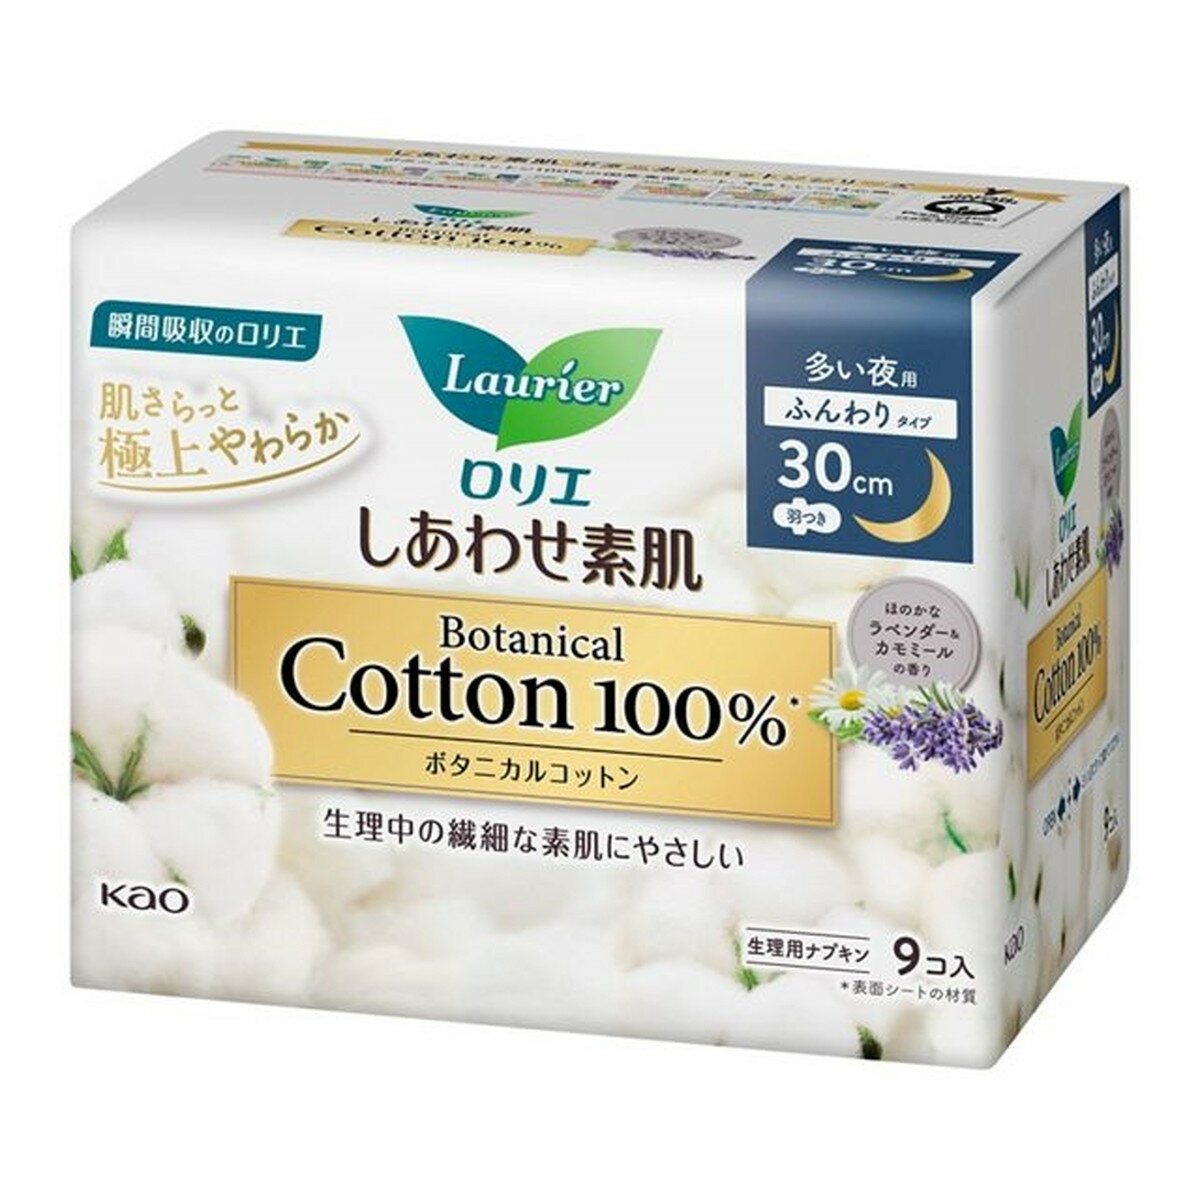 ԉ G 킹f Botanical Cotton {^jJ Rbg 100% p 30cm H 9R 򕔊Oi